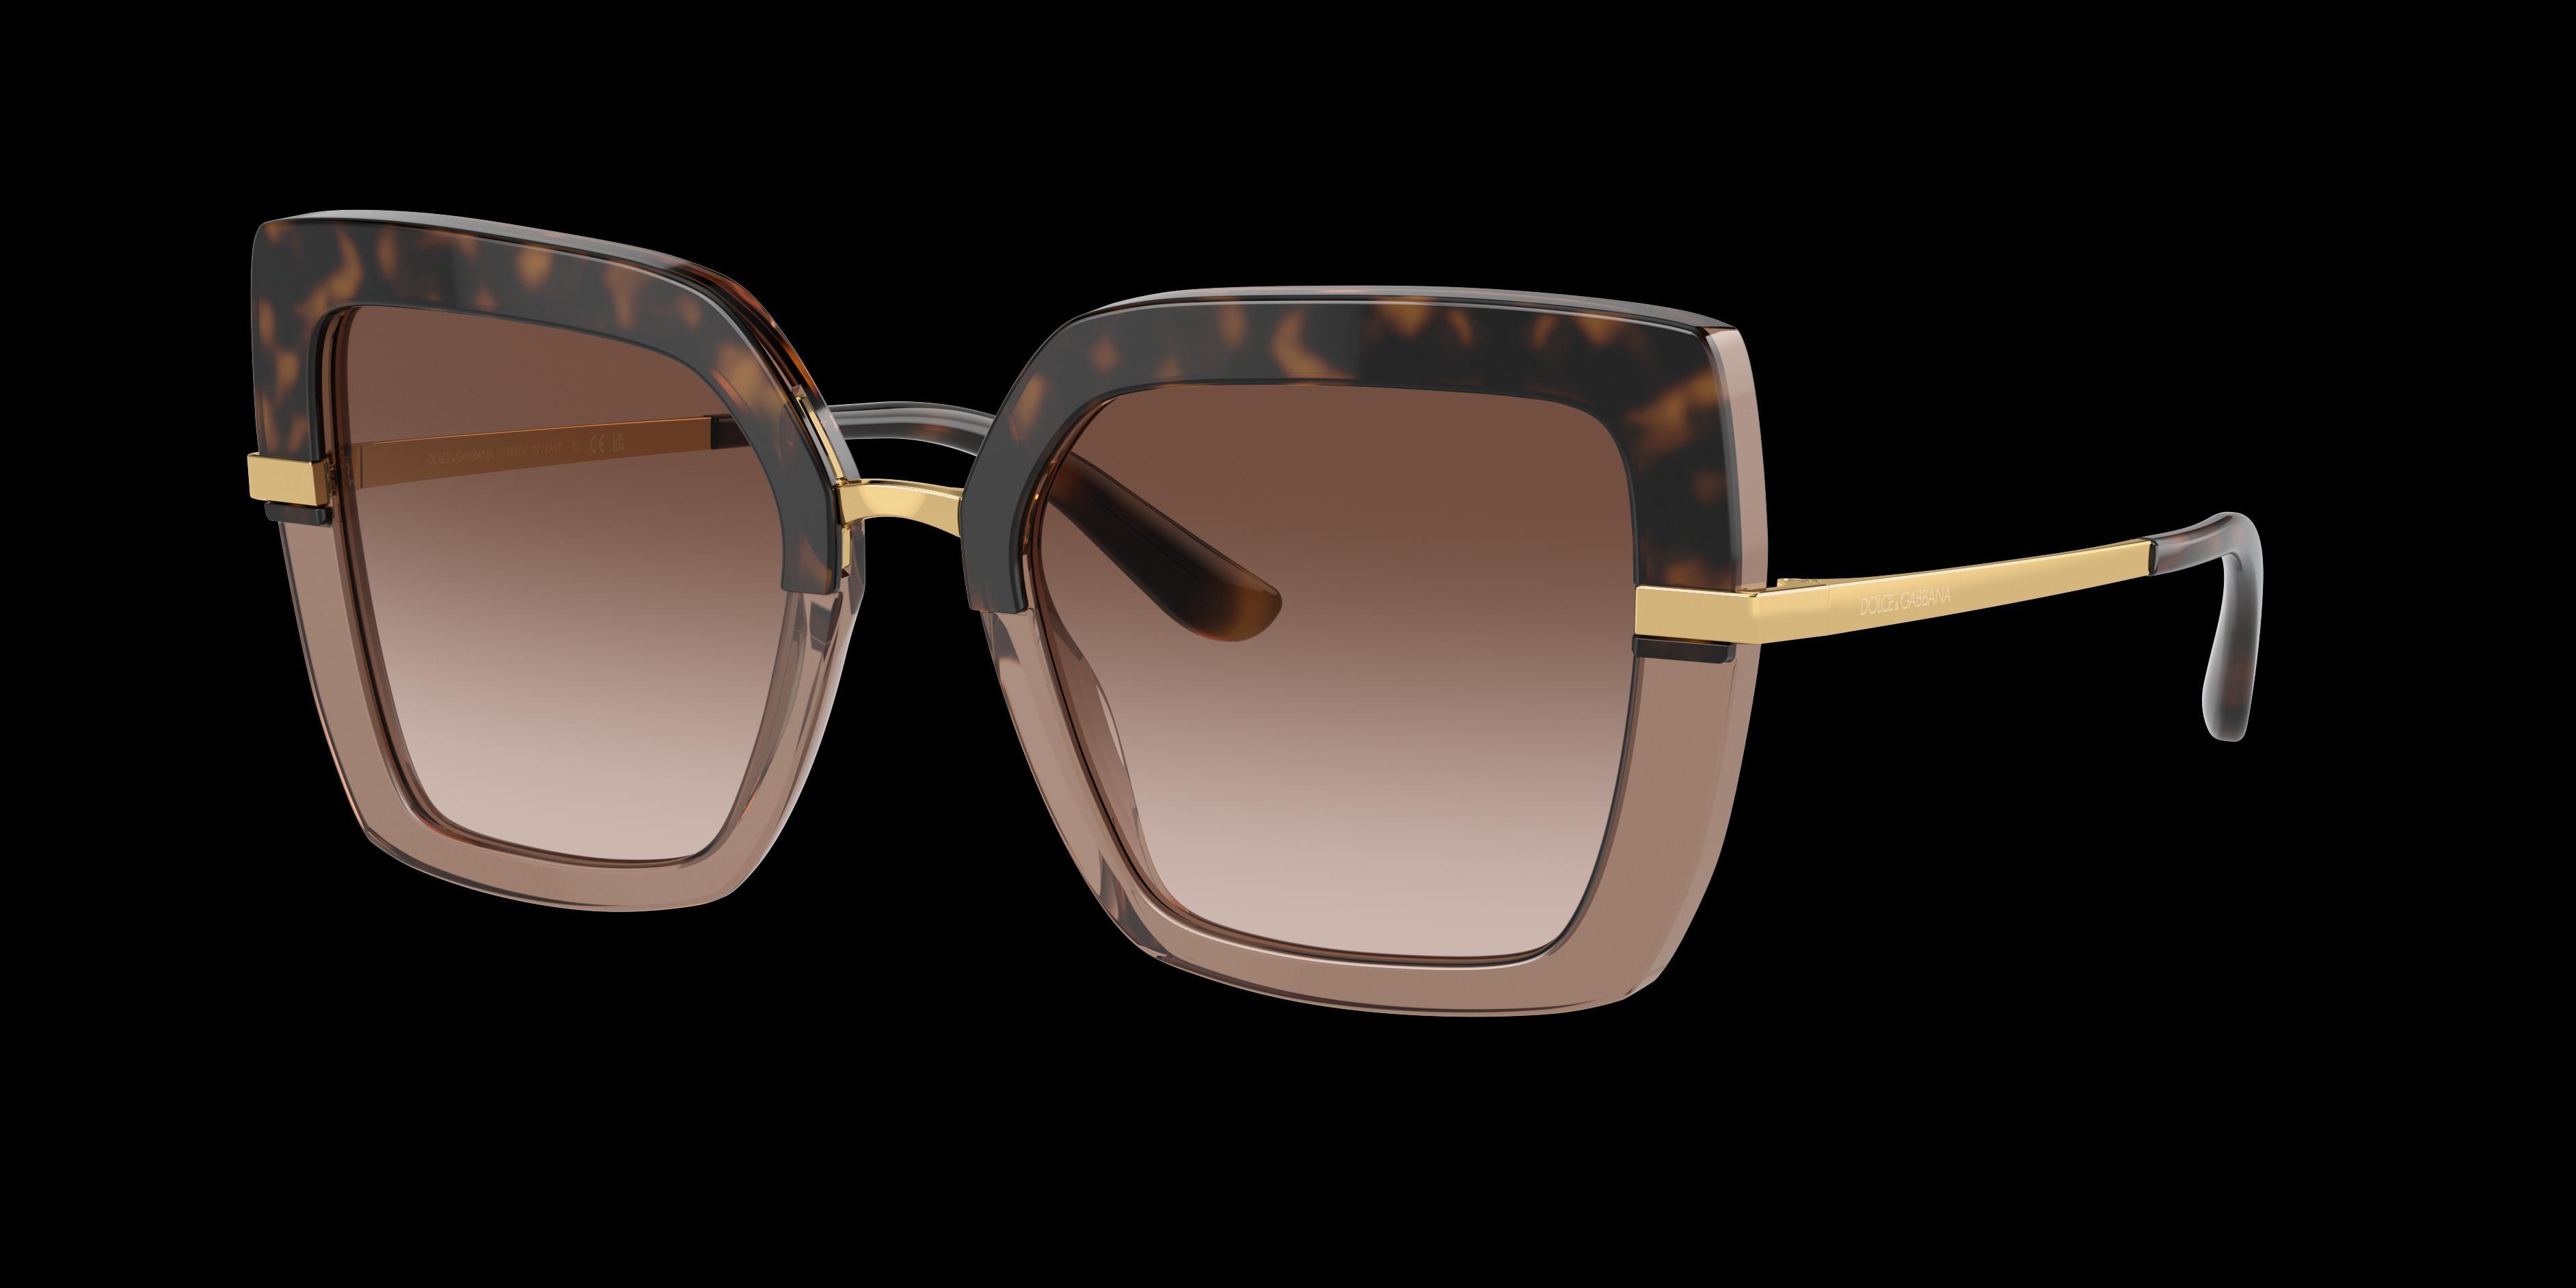 Dolce & Gabbana 52mm Square Sunglasses Product Image